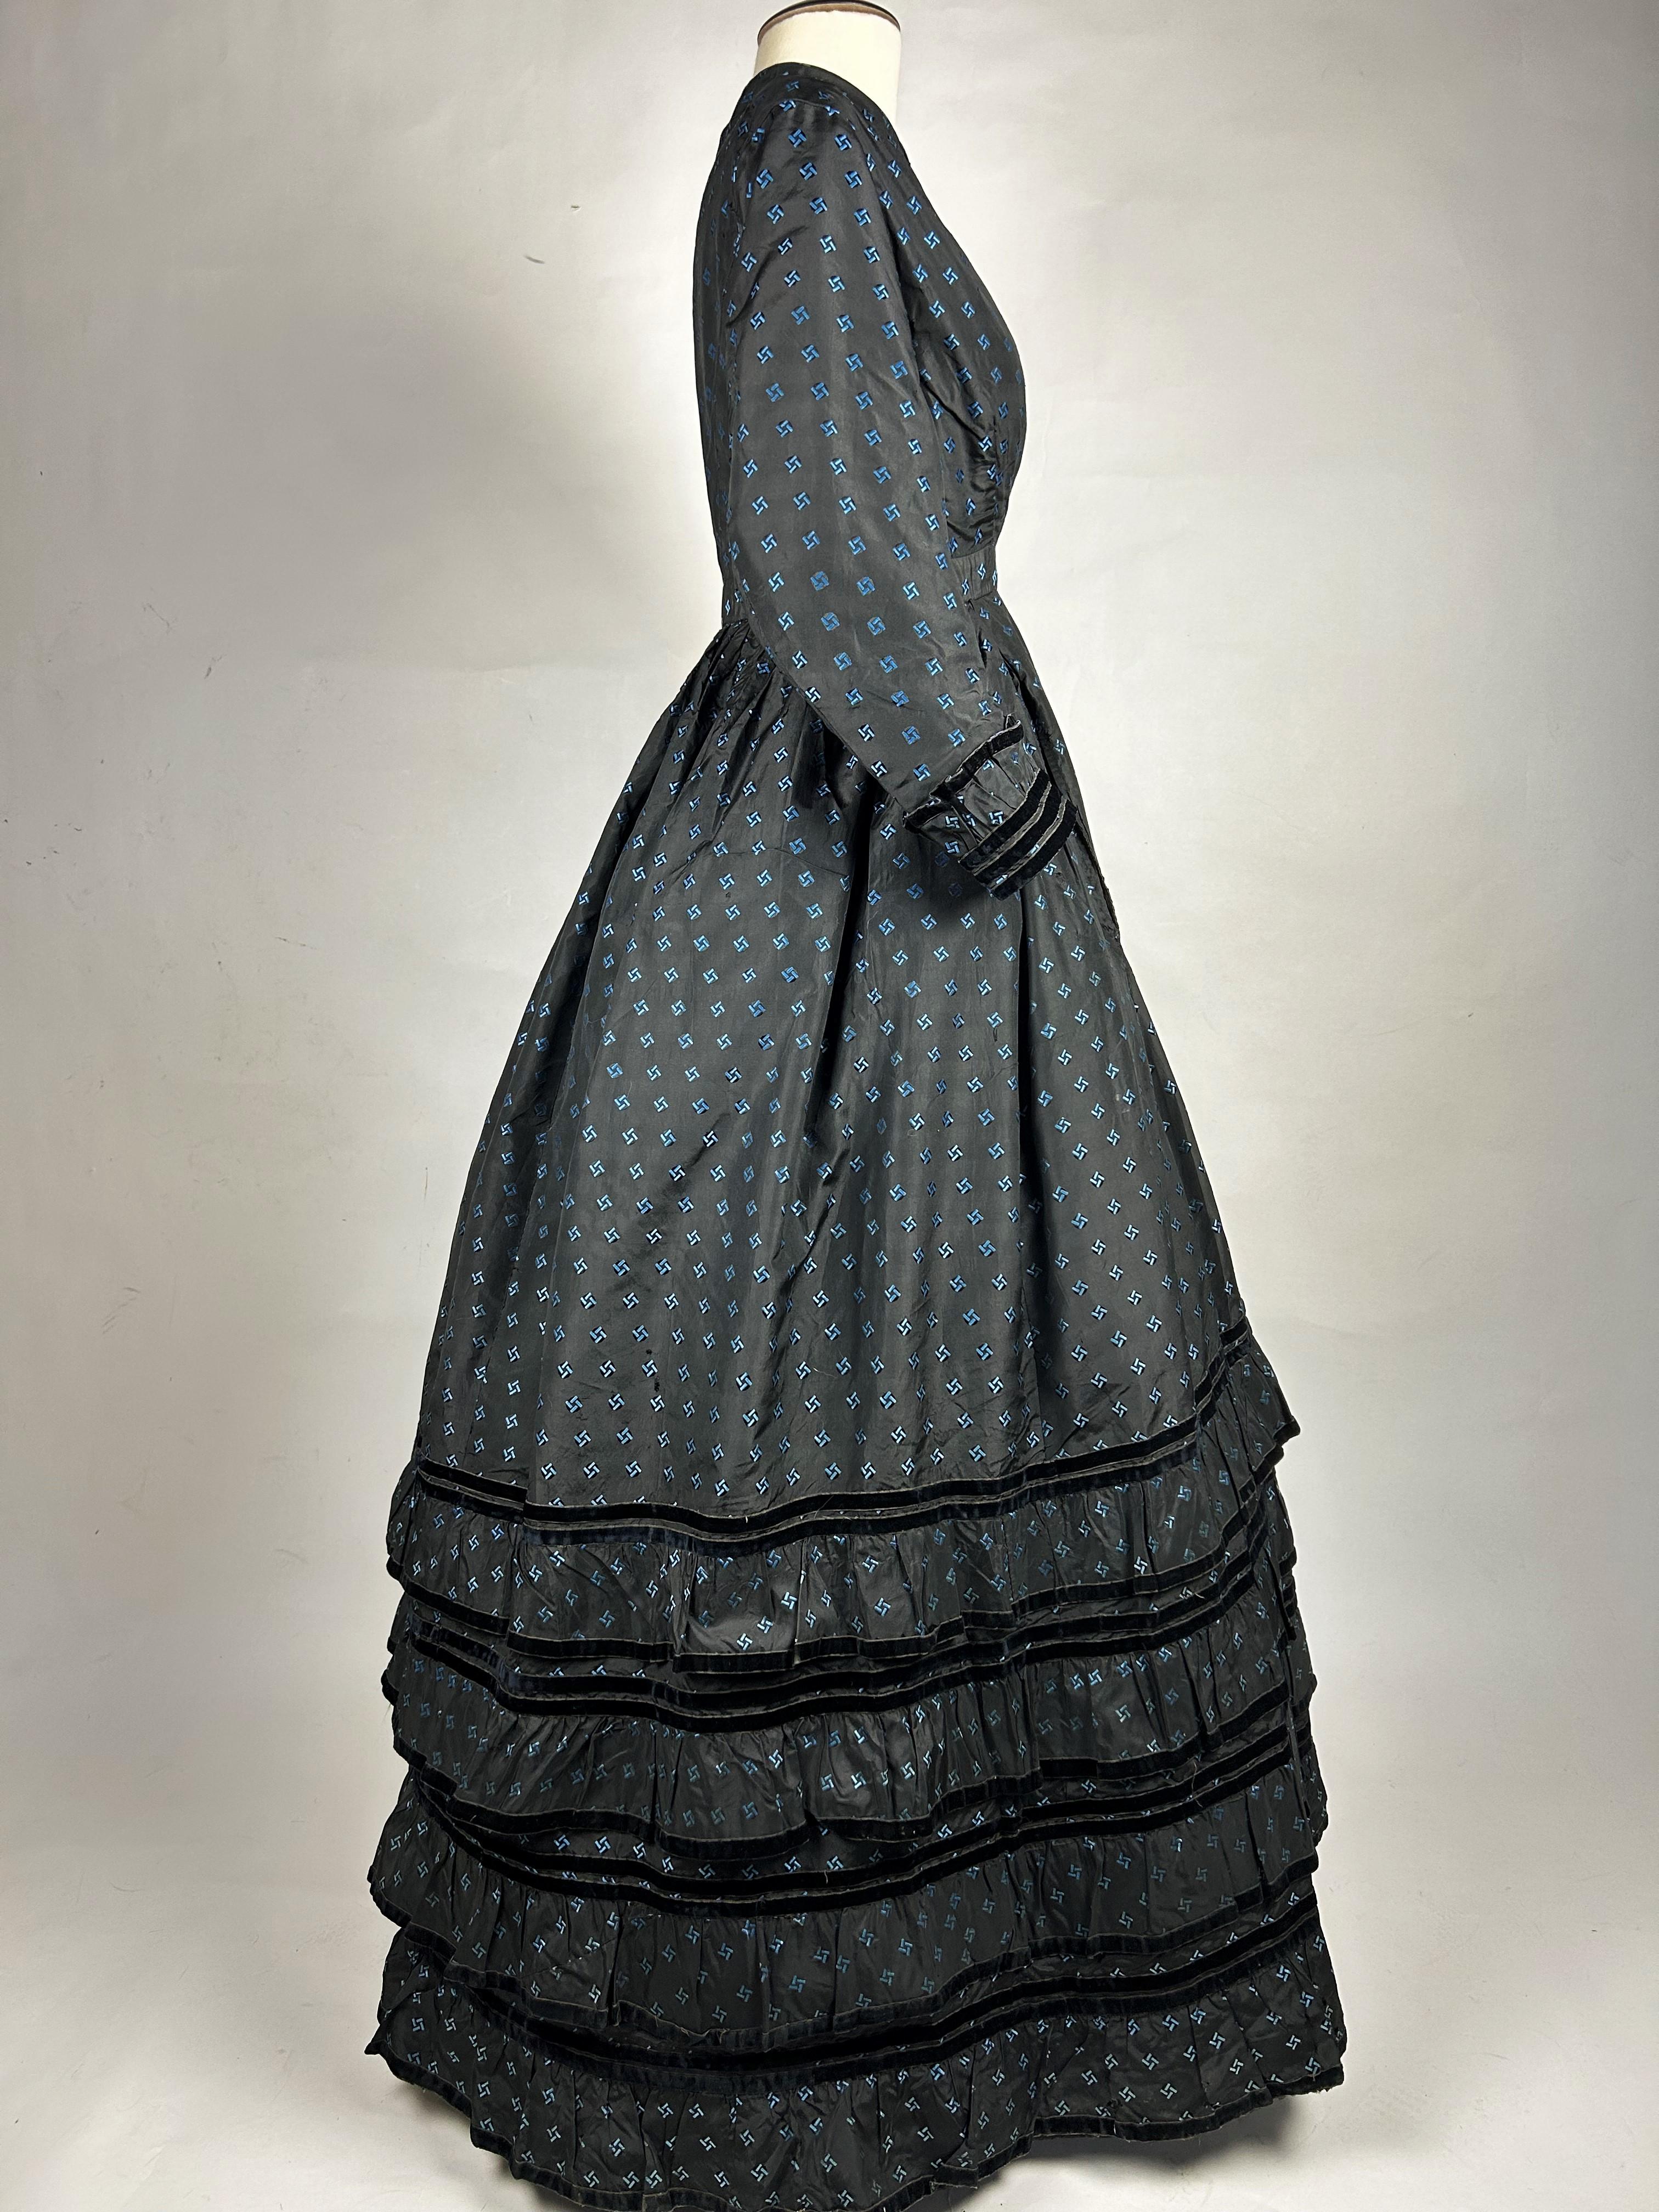 Women's A Crinoline Day dress in black taffeta brocaded silk brocaded France Circa 1870